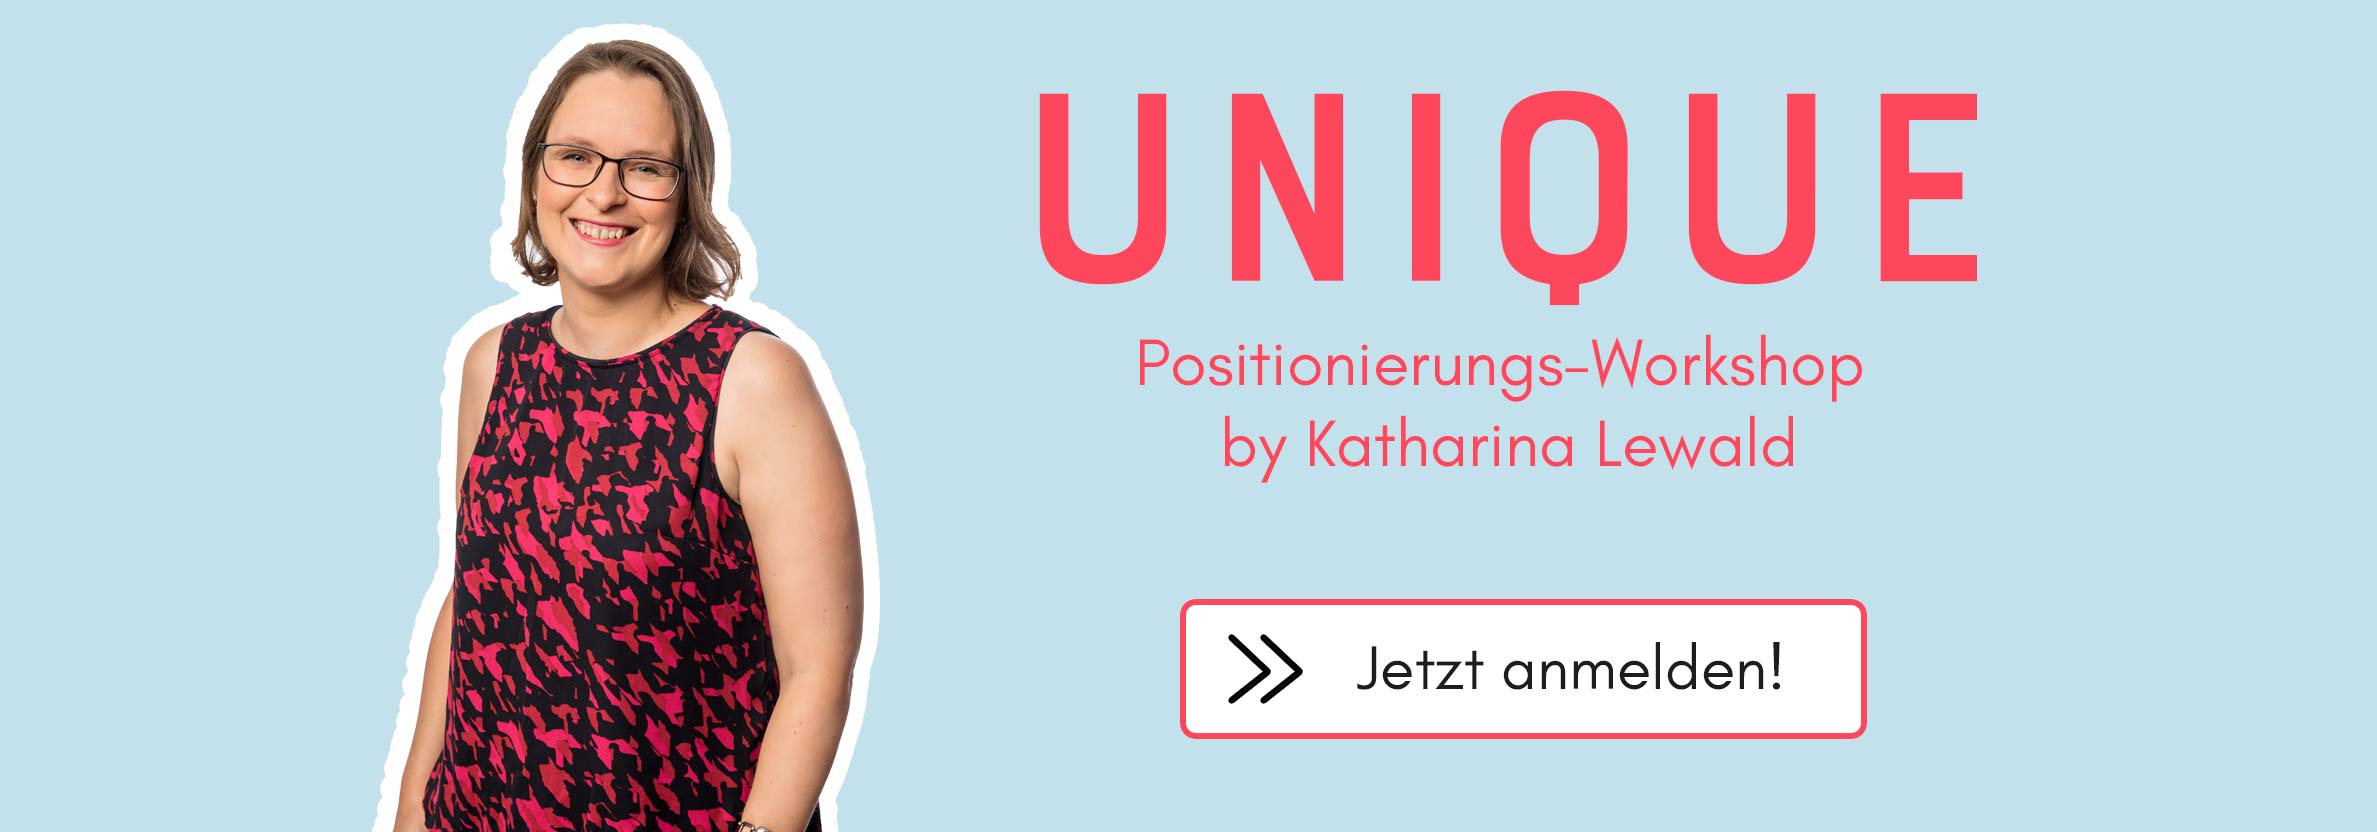 Positionierungs Workshop "Unique" by Katharina Lewald